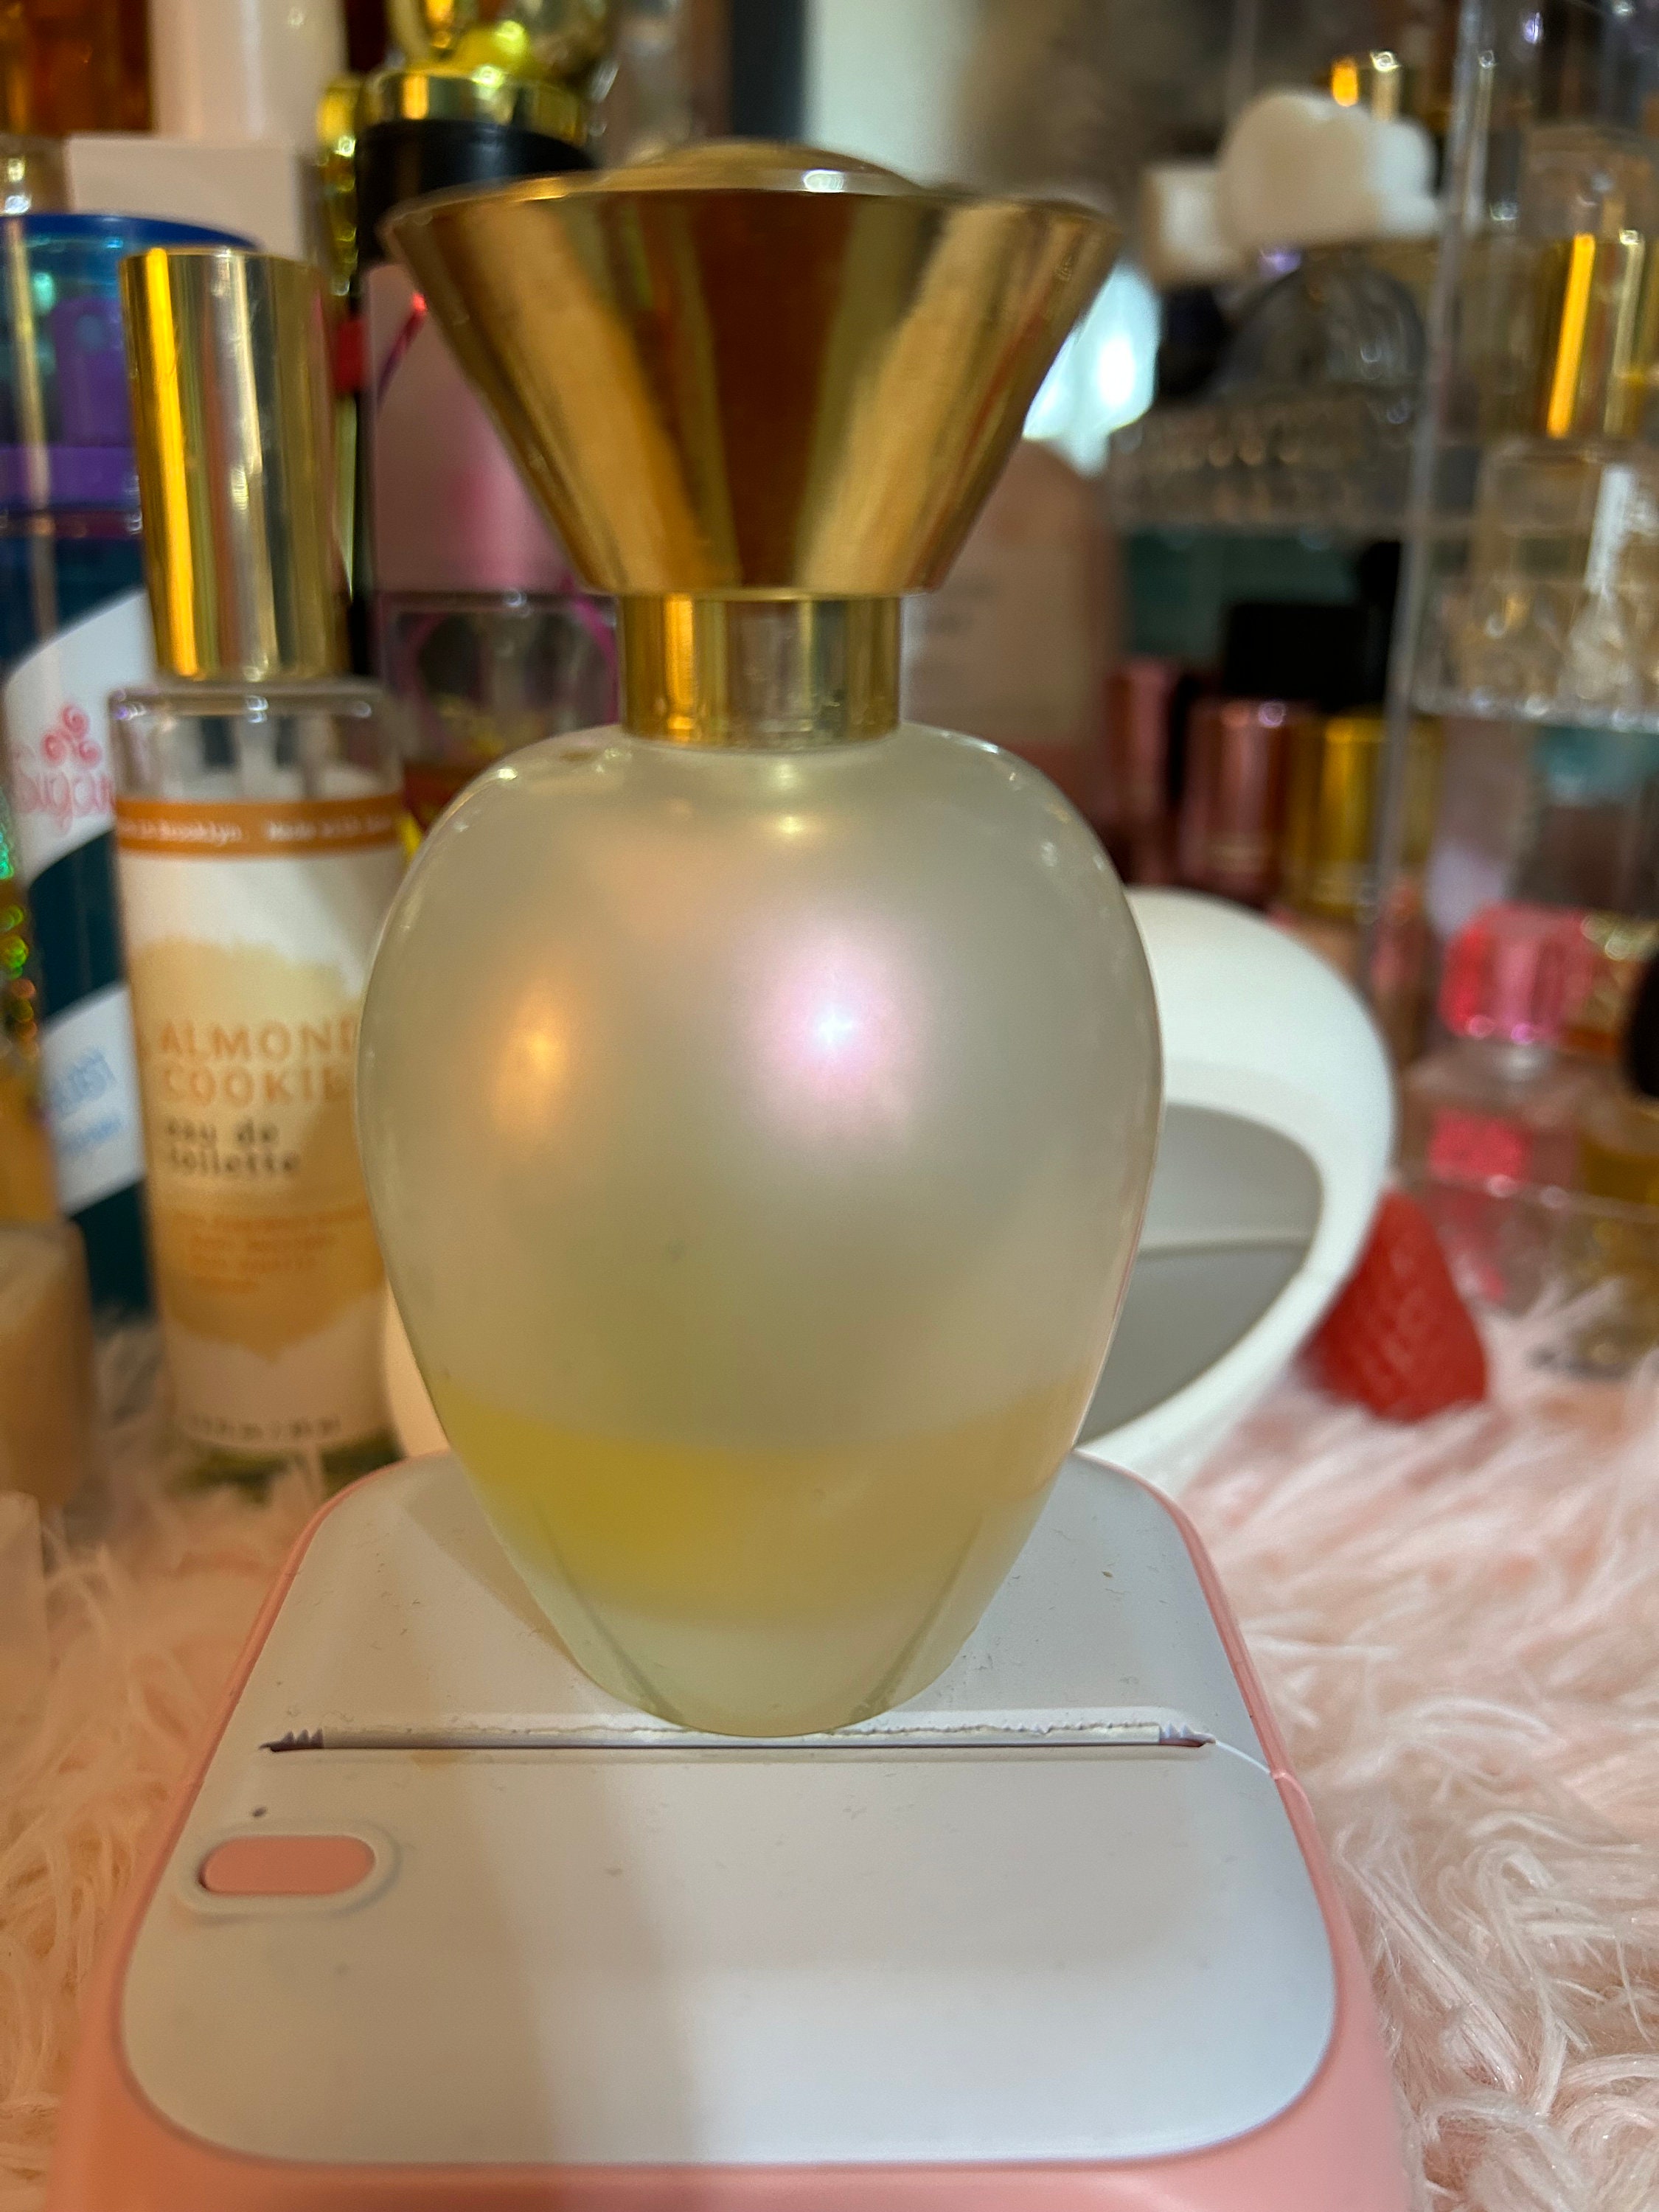  Avon Rare Pearls Eau De Parfum Spray for Women, 1.7 Fluid  Ounce : Beauty & Personal Care